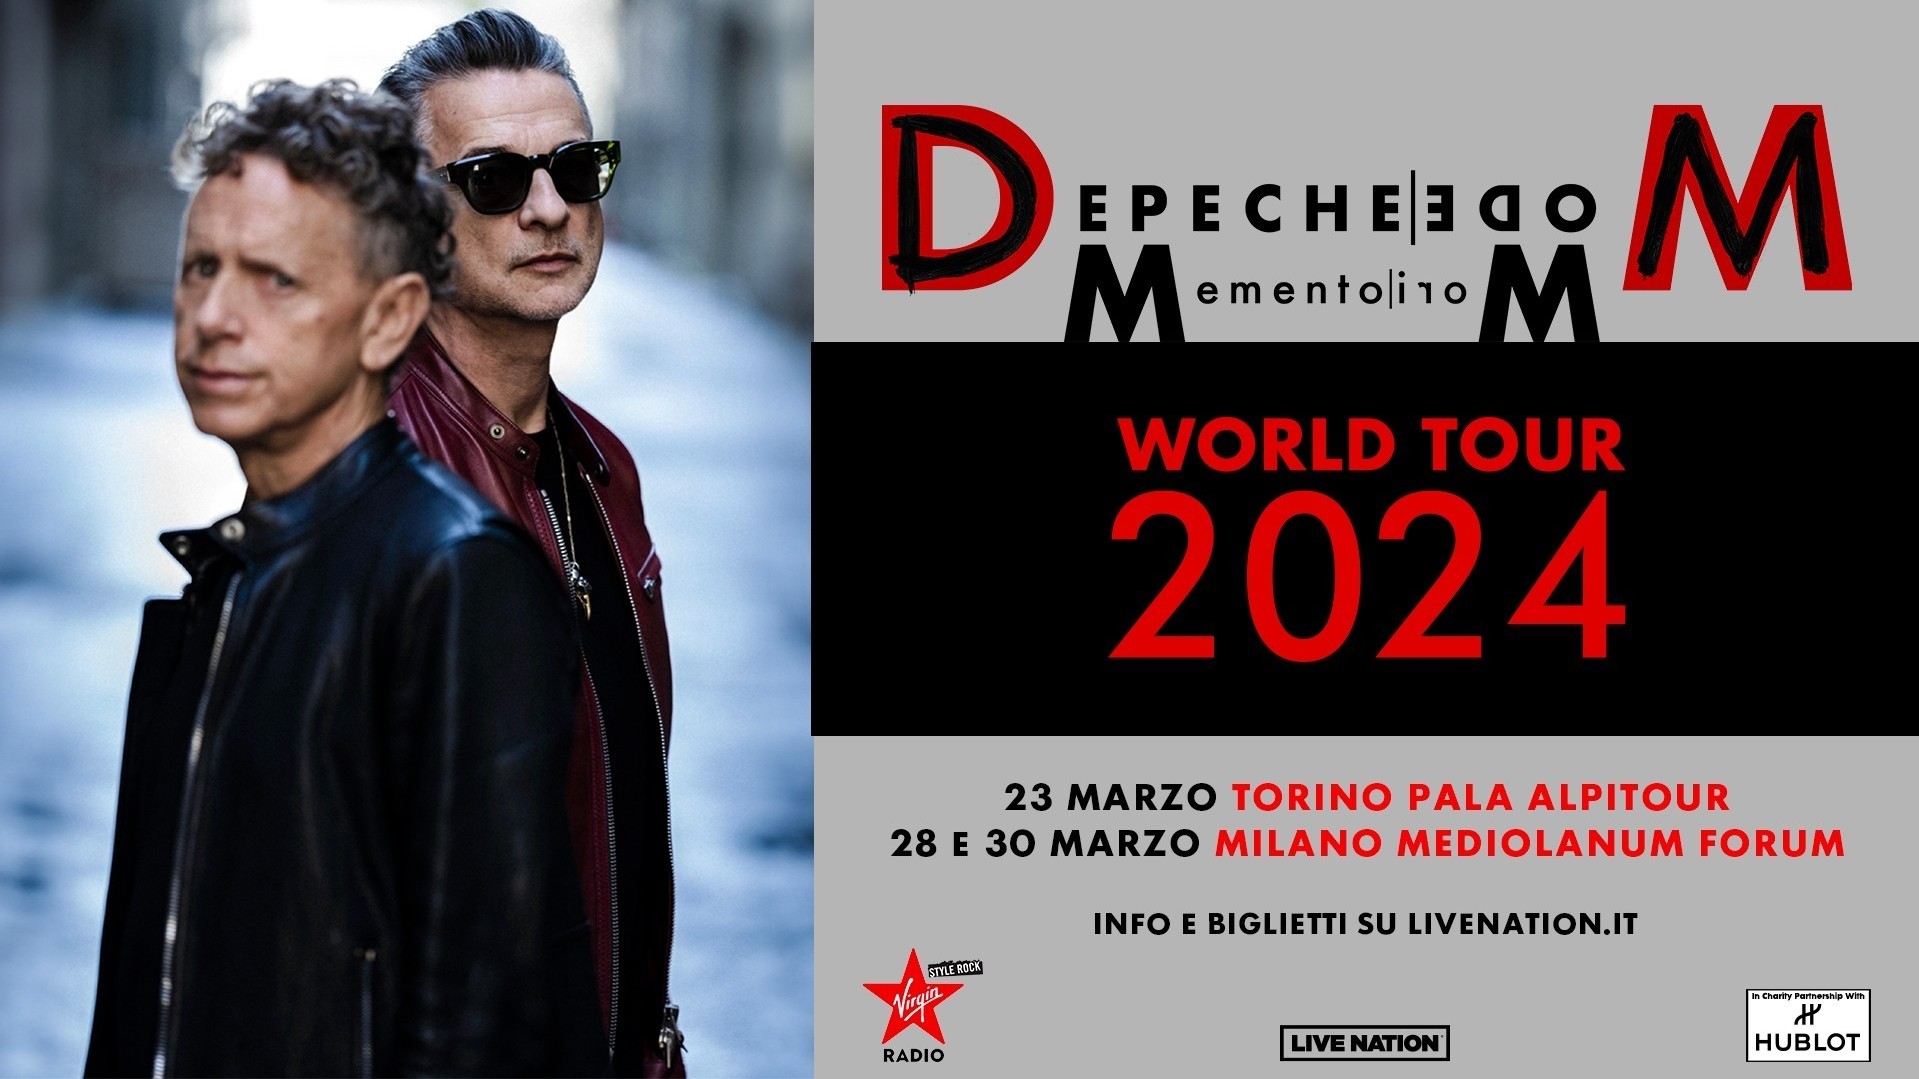 Depeche Mode "Memento Mori World Tour 2024"